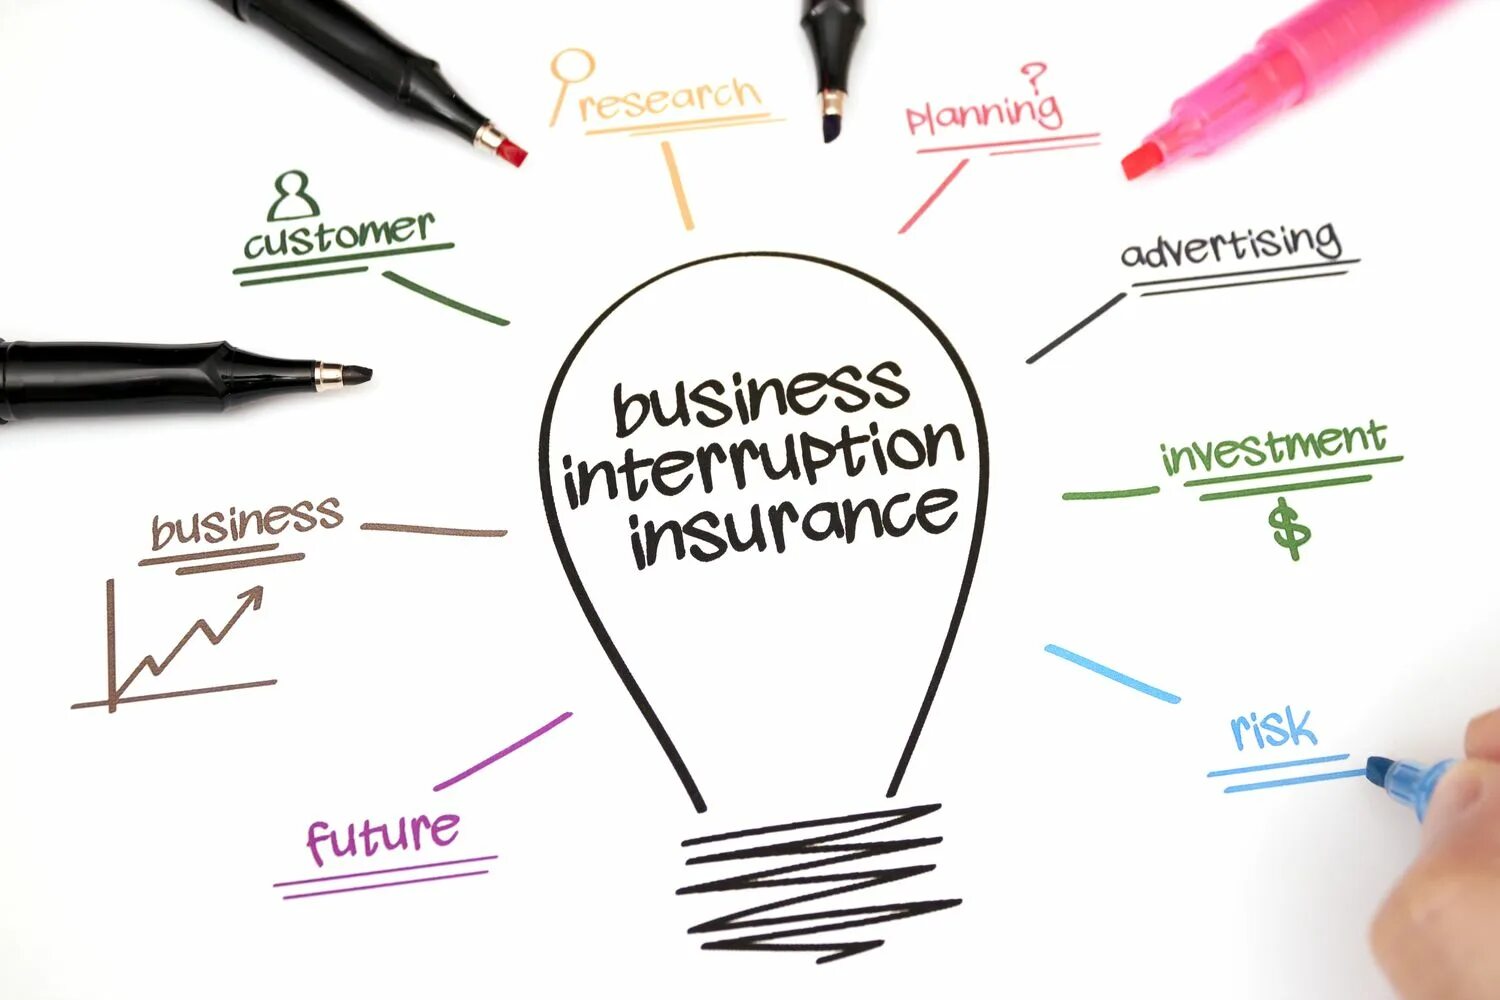 Competitive advantage. Roi в маркетинге. Return on investment. Business interruption insurance ракурс.